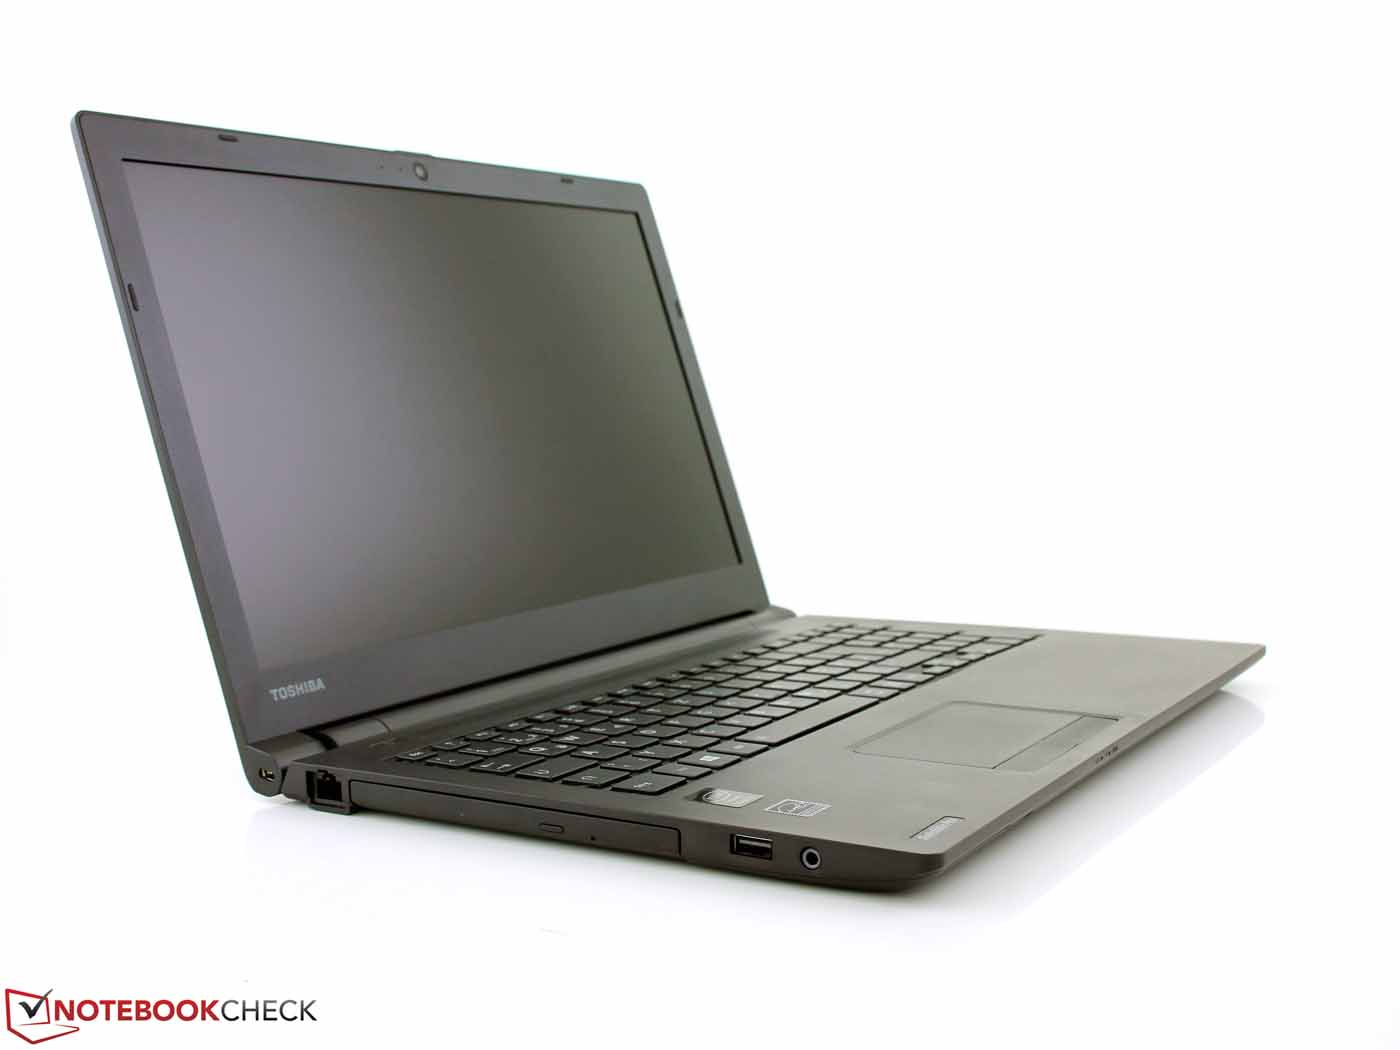 Toshiba Satellite Pro R50 Series - Notebookcheck.net External Reviews